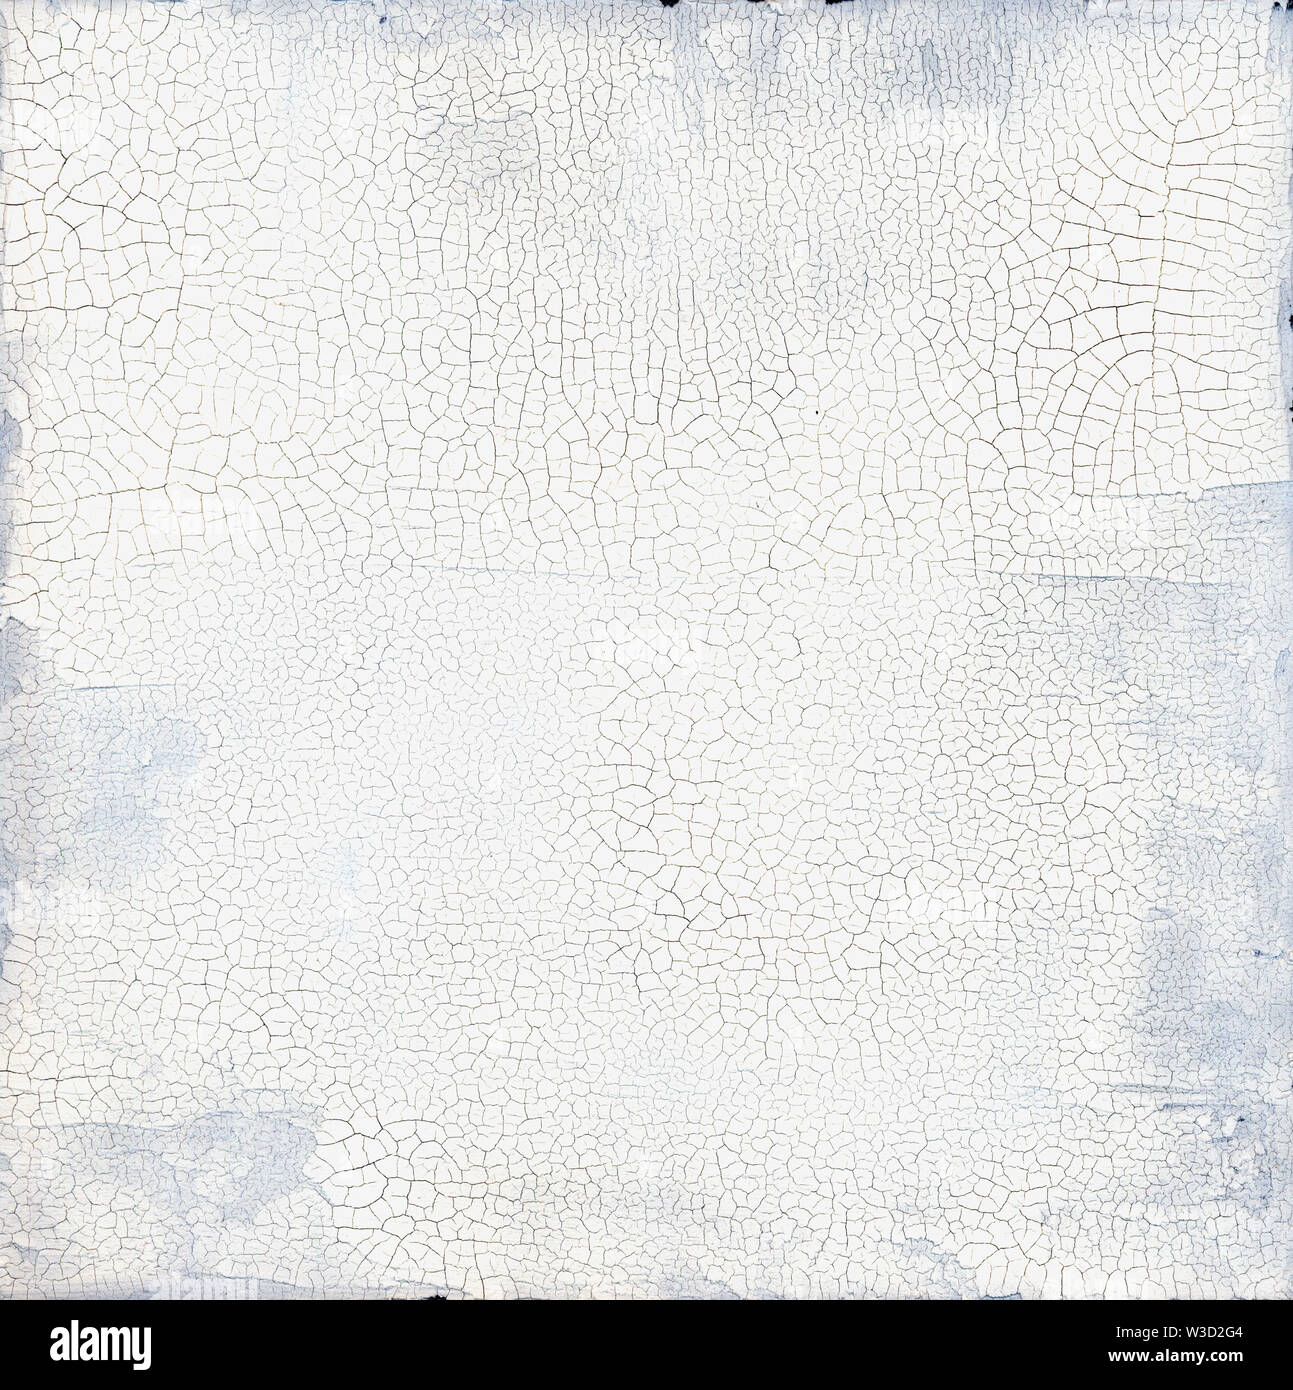 White zen minimalist cracked texture artwork painting background. Conceptual desert or time creative design element. Stock Photo